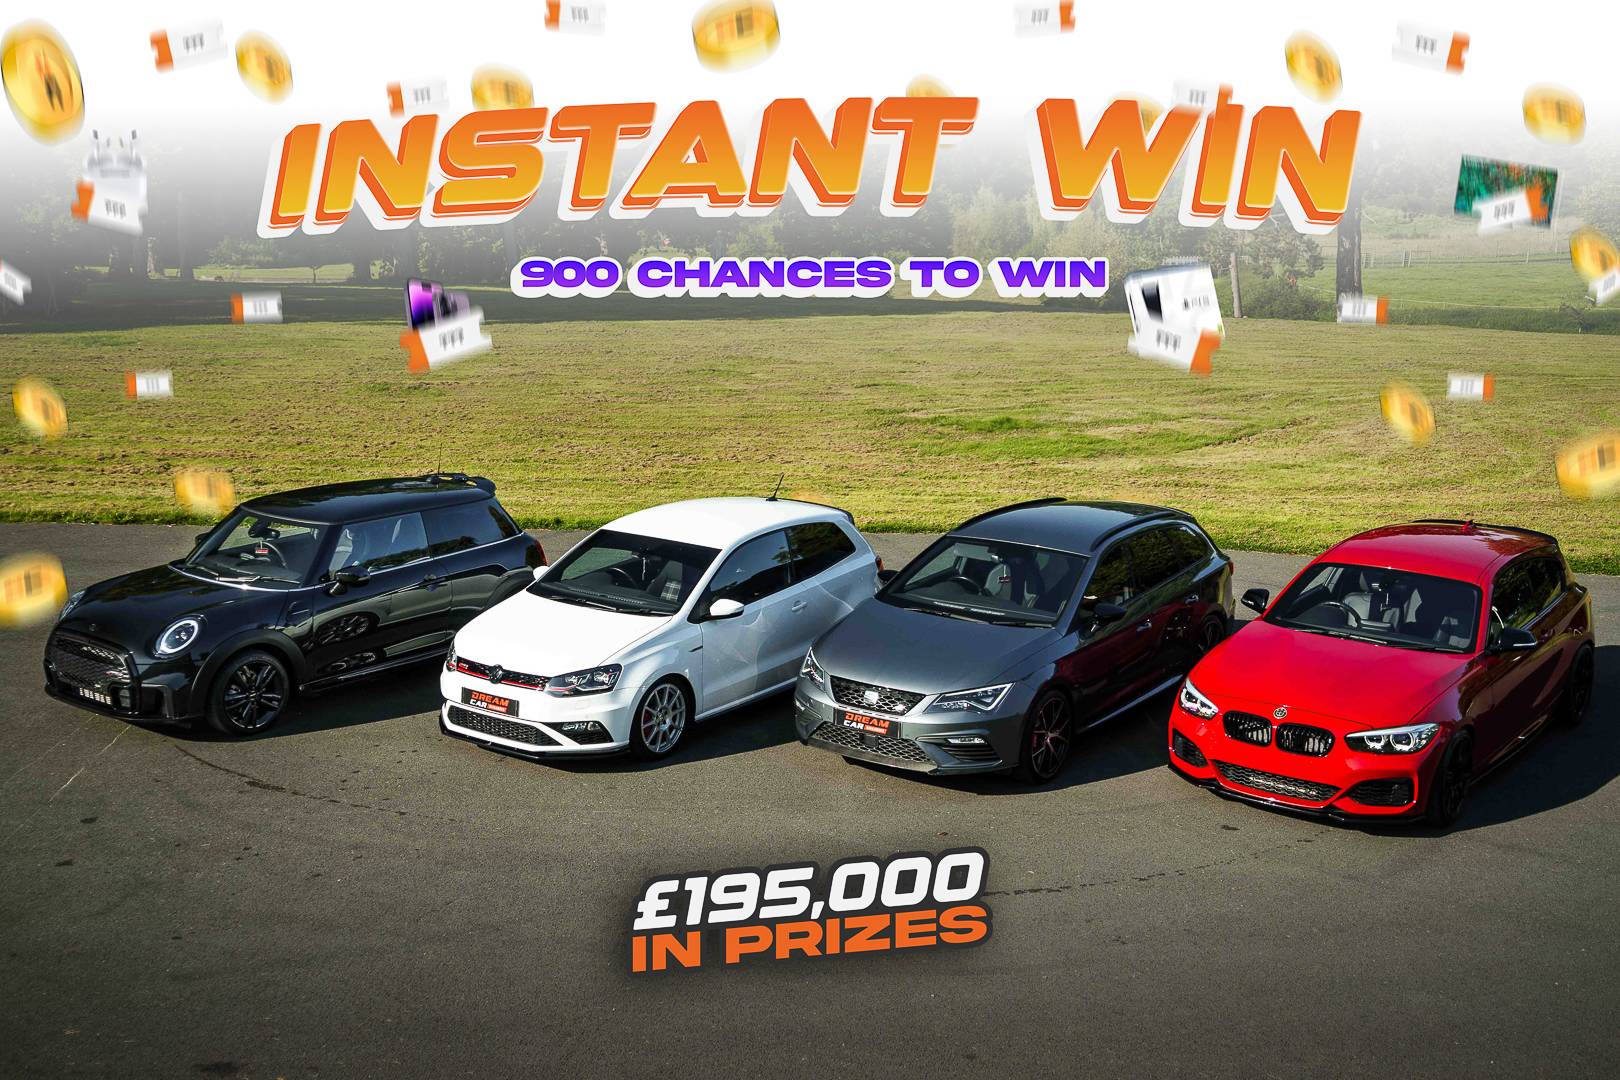 Win 900 Instant Wins  / £195,000 Prize Pot - £10,000 End Prize!